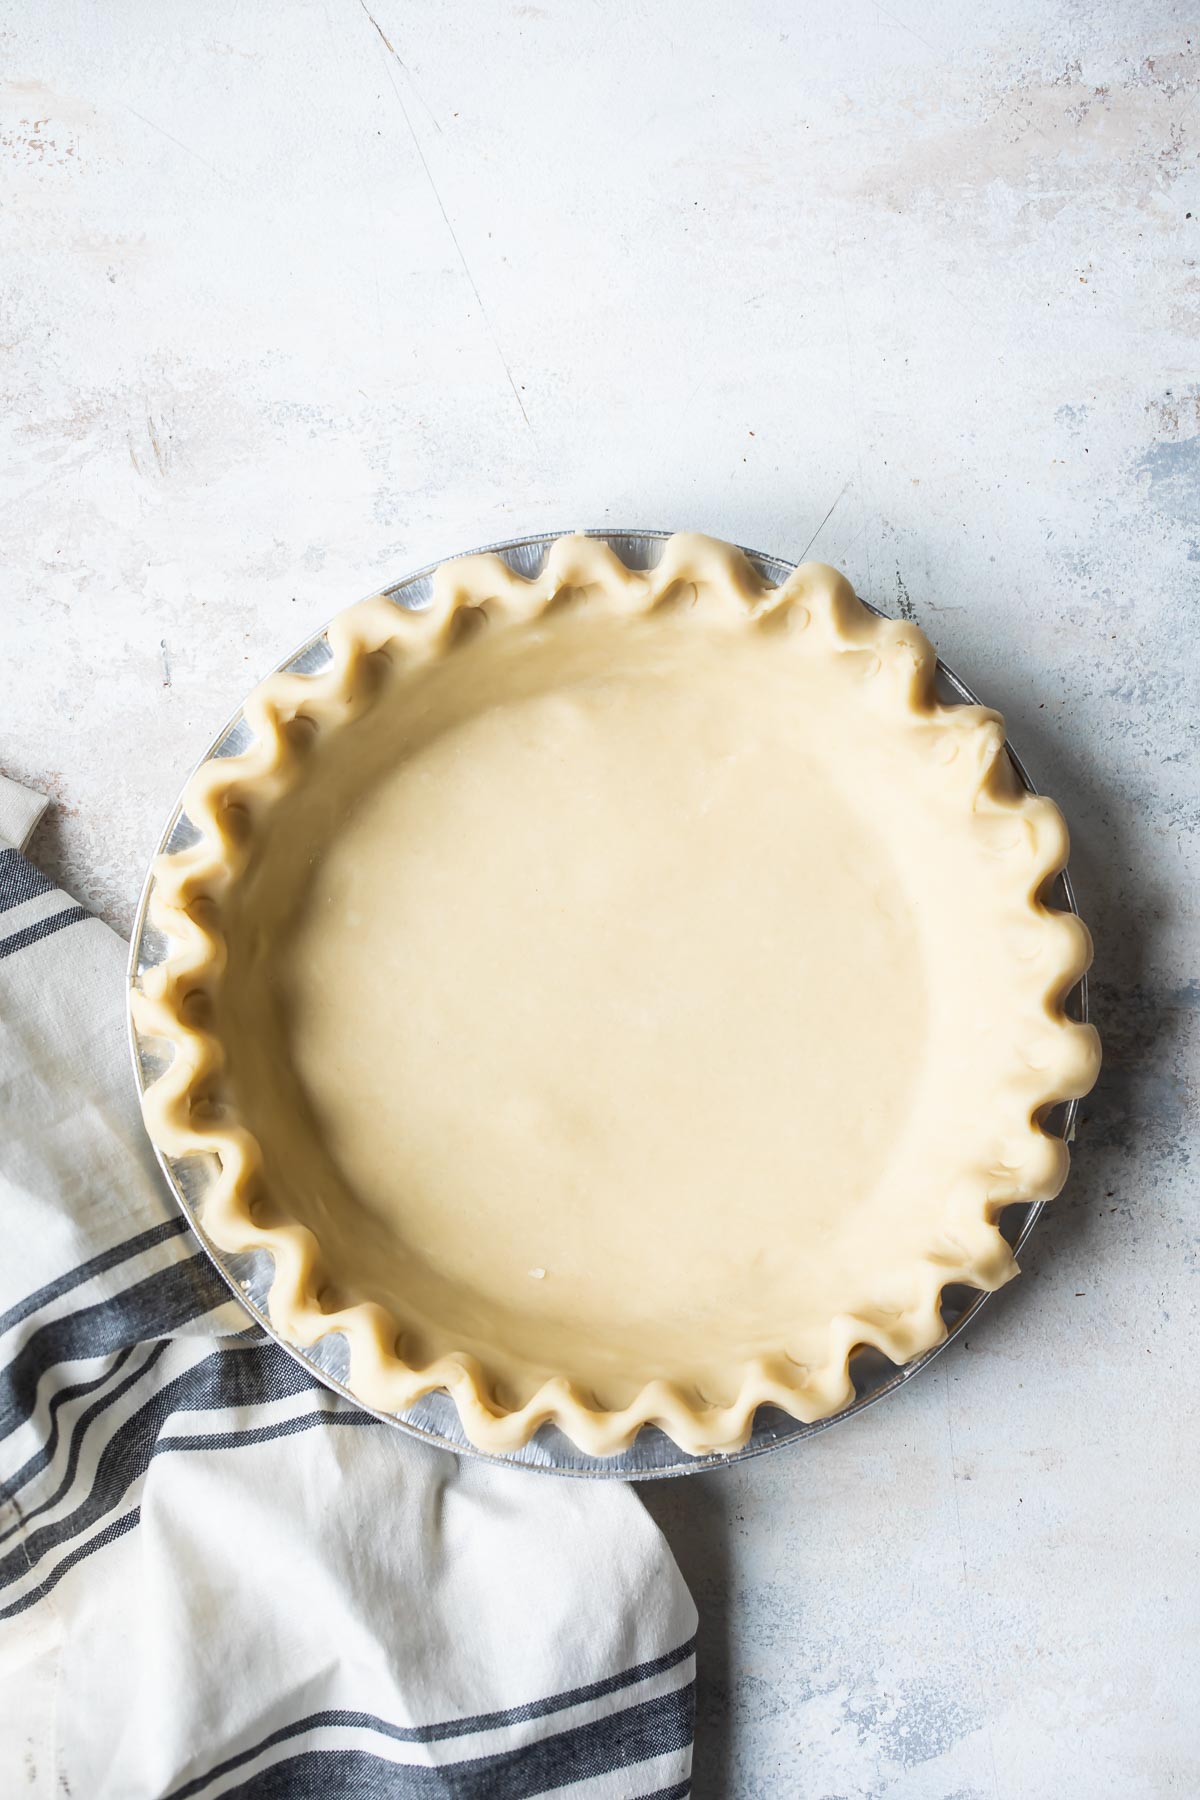 https://www.culinaryhill.com/wp-content/uploads/2023/03/How-to-Make-a-Pie-Crust-Culinary-Hill-LR-09.jpg